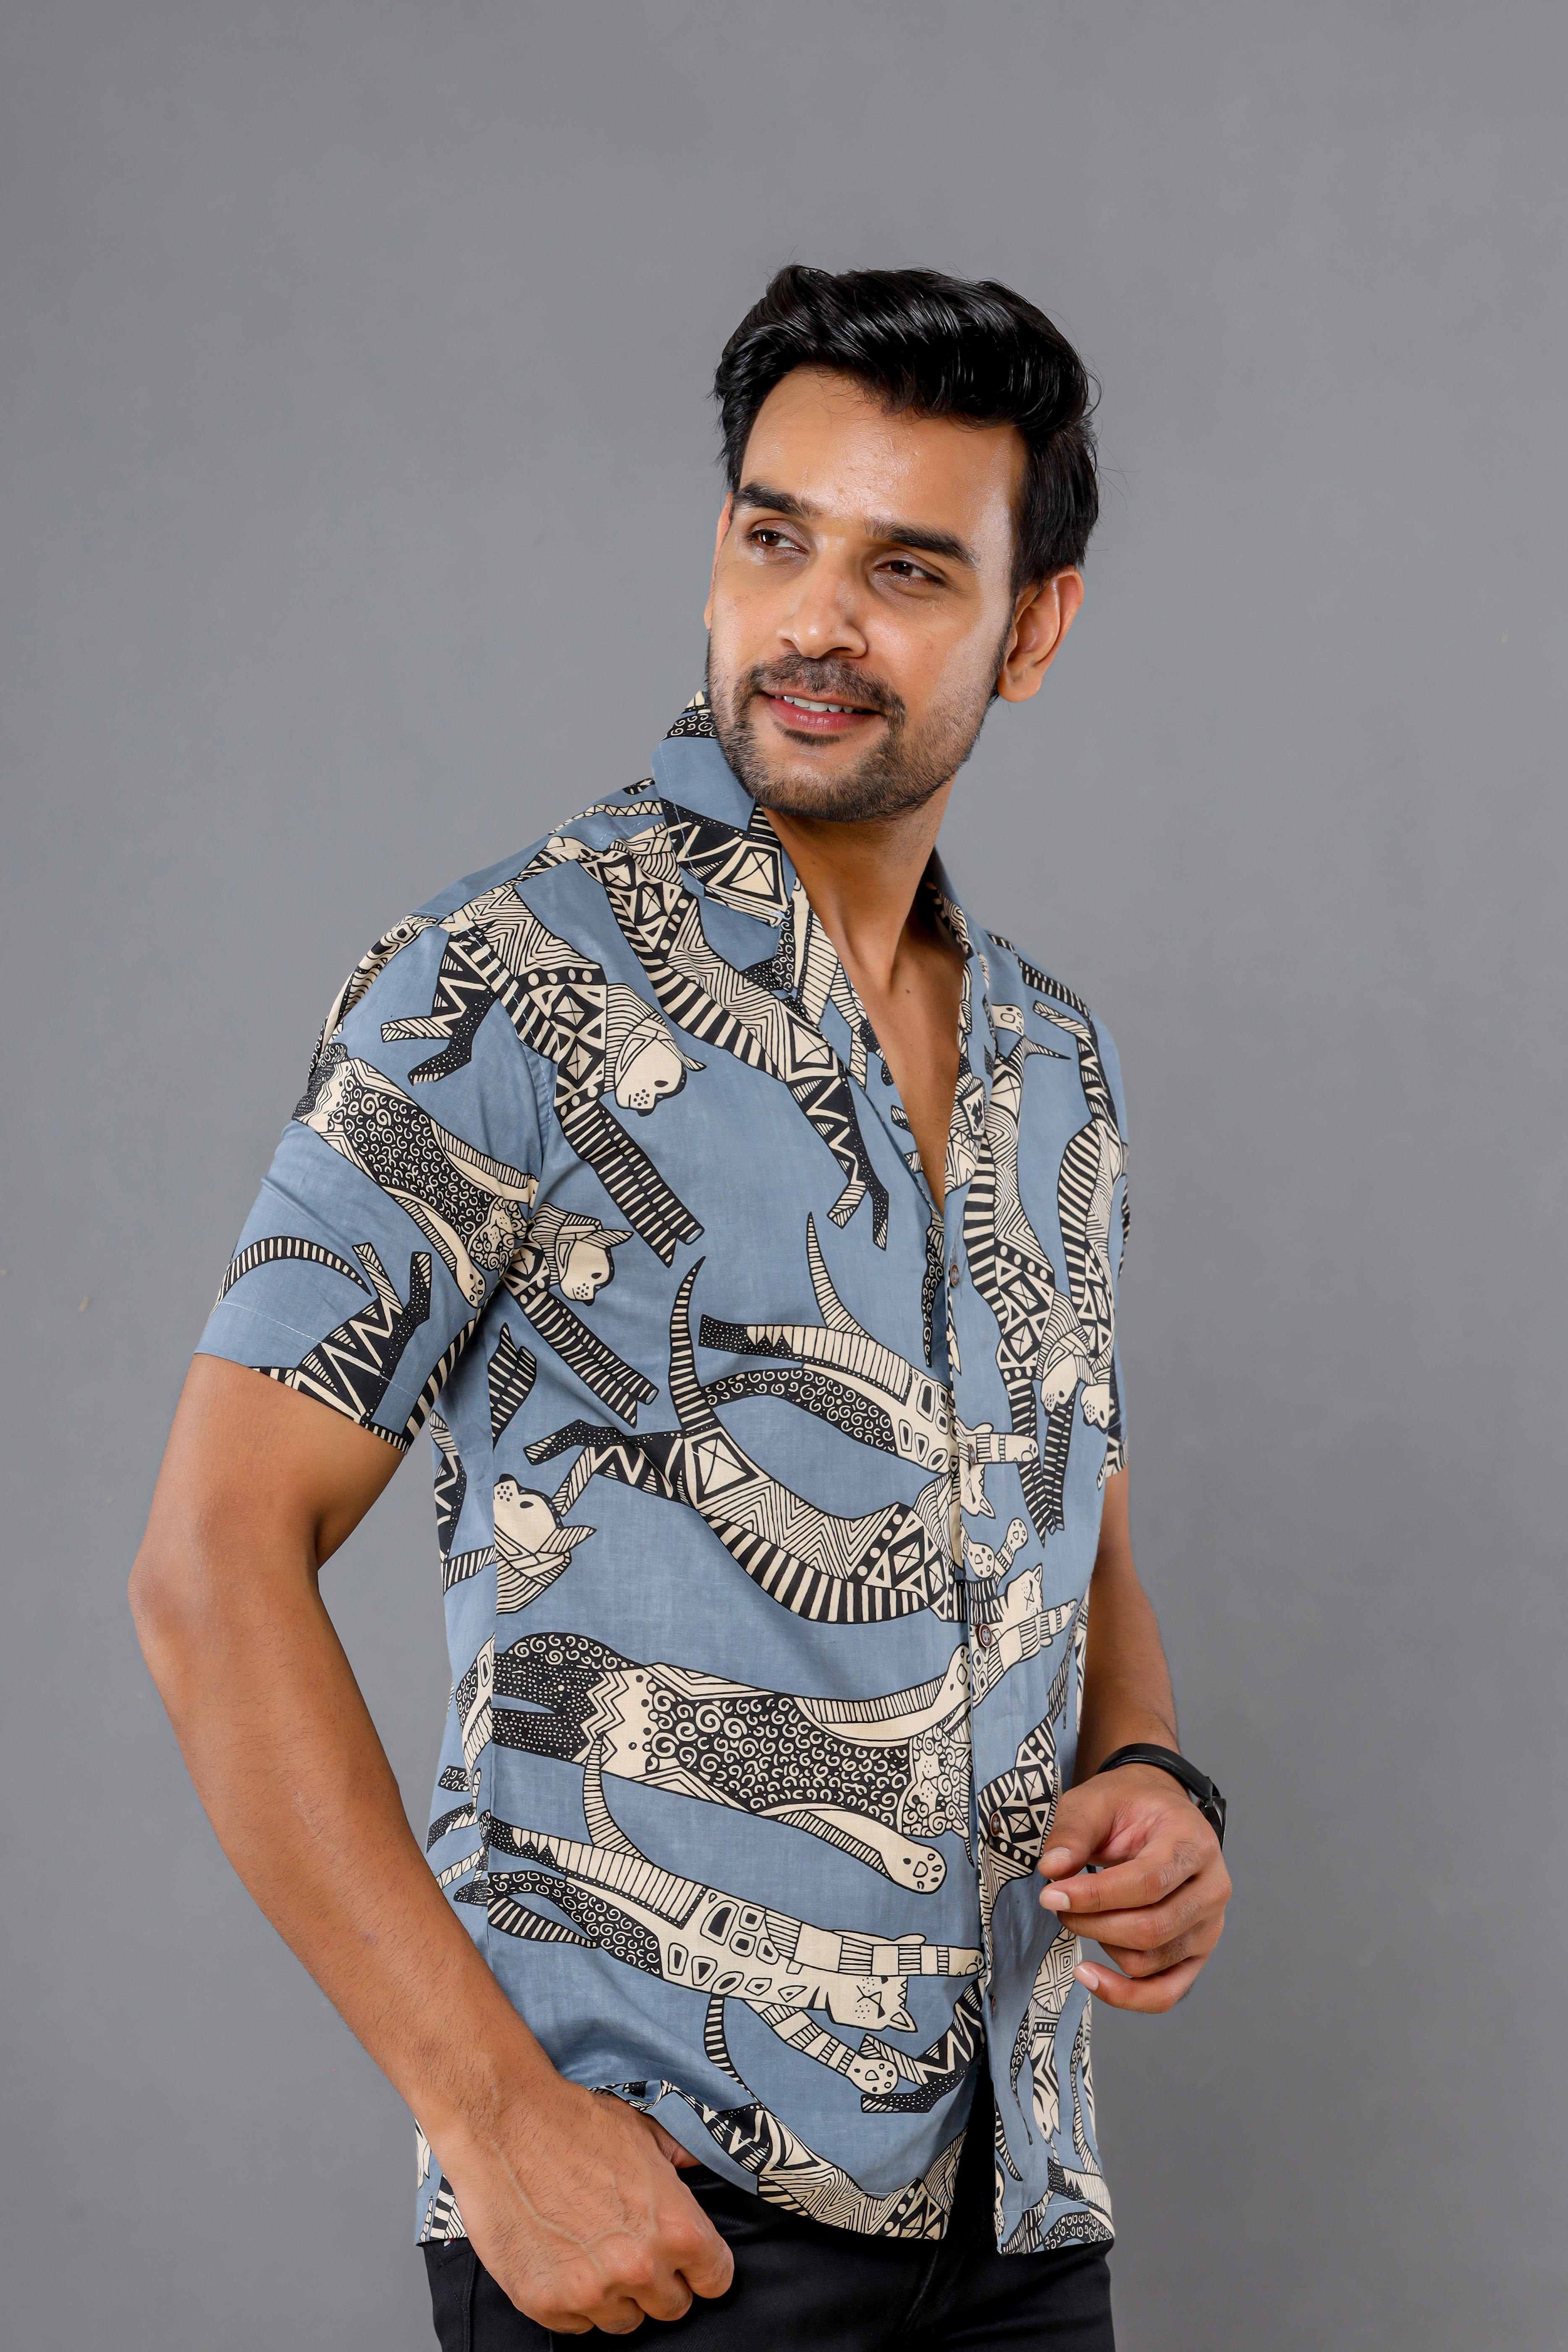 Purchase Newest Yellow Jaipuri Cotton Printed Shirt Online